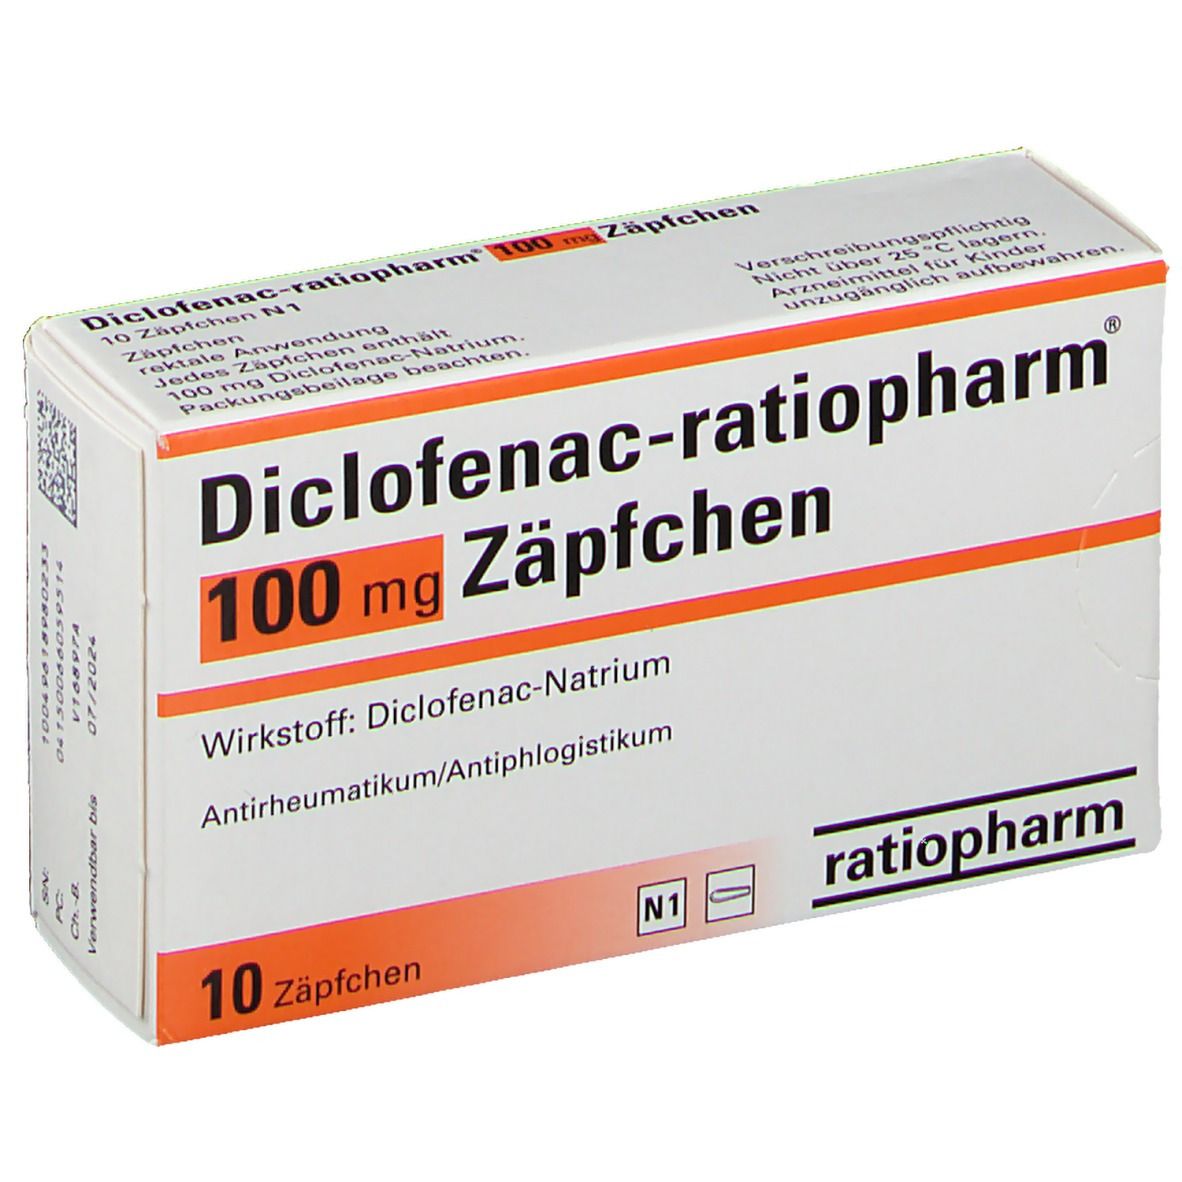 diclofenac ratiopharm 100 zaepfchen suppositorien D06605951 p10